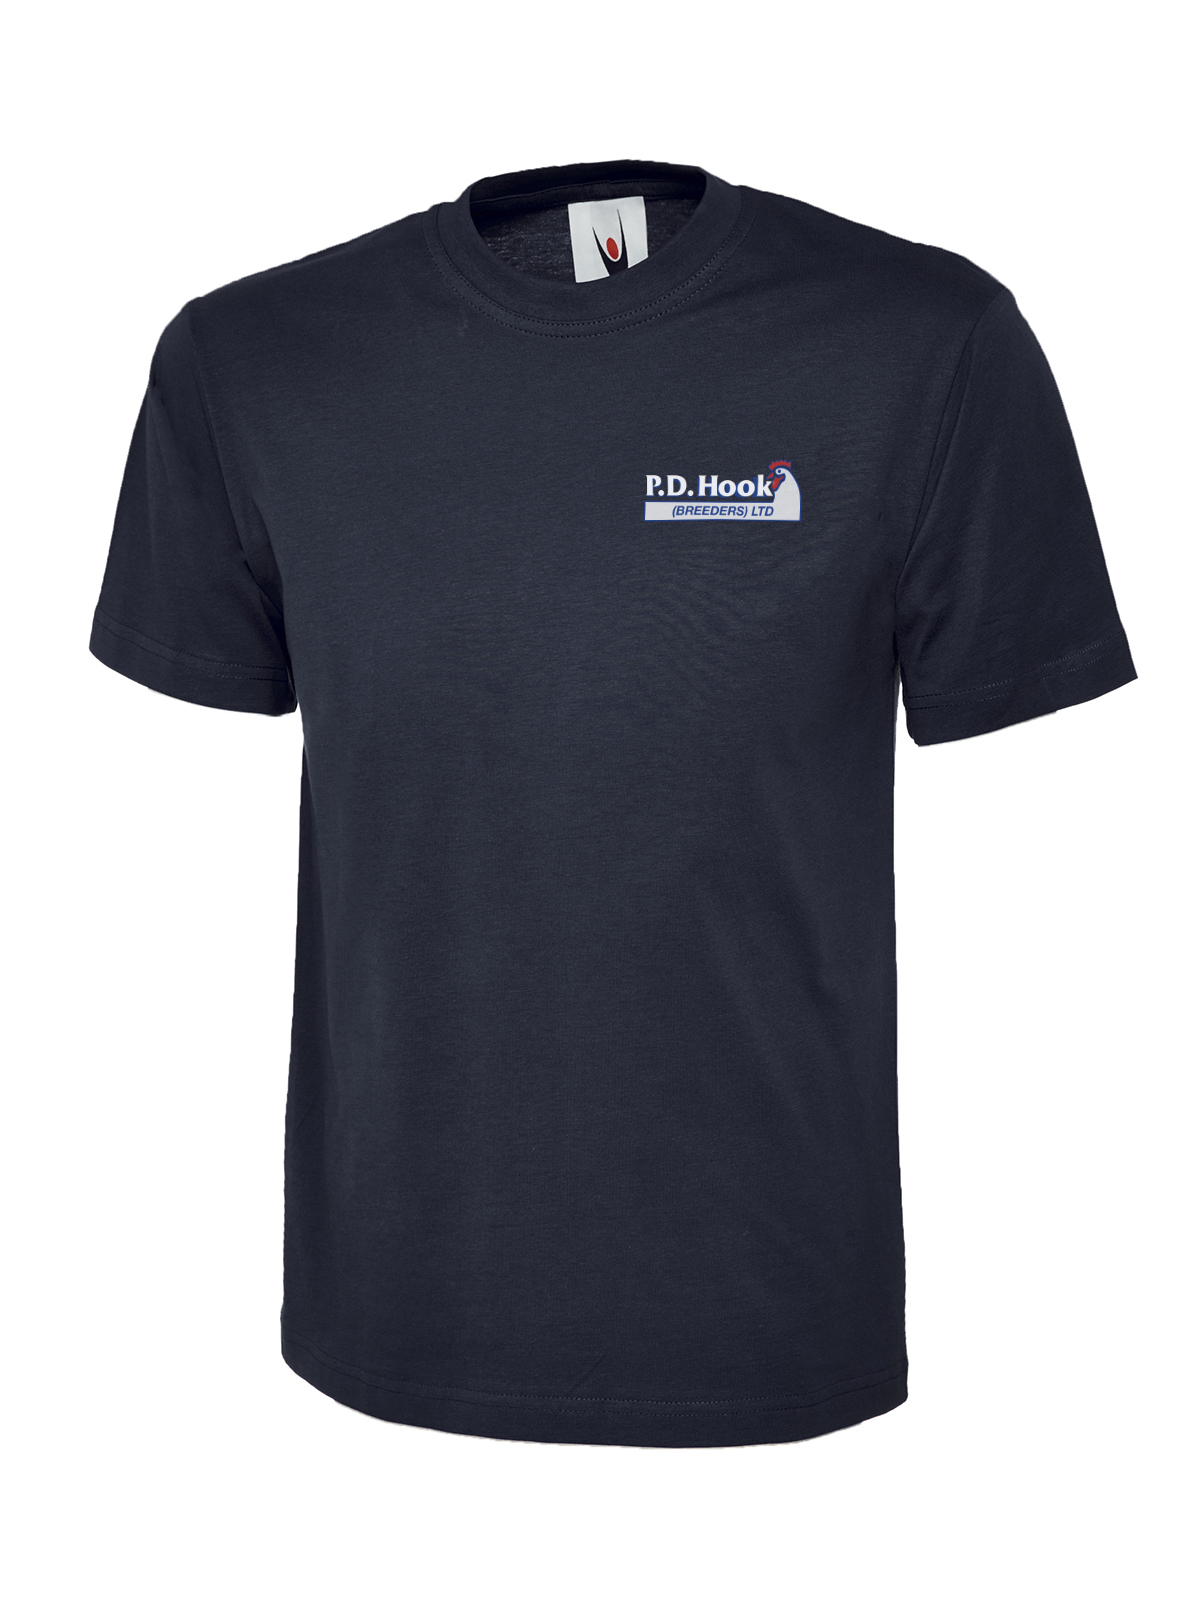 P D Hook (Breeders) Ltd - T-Shirt, Navy - Size Medium